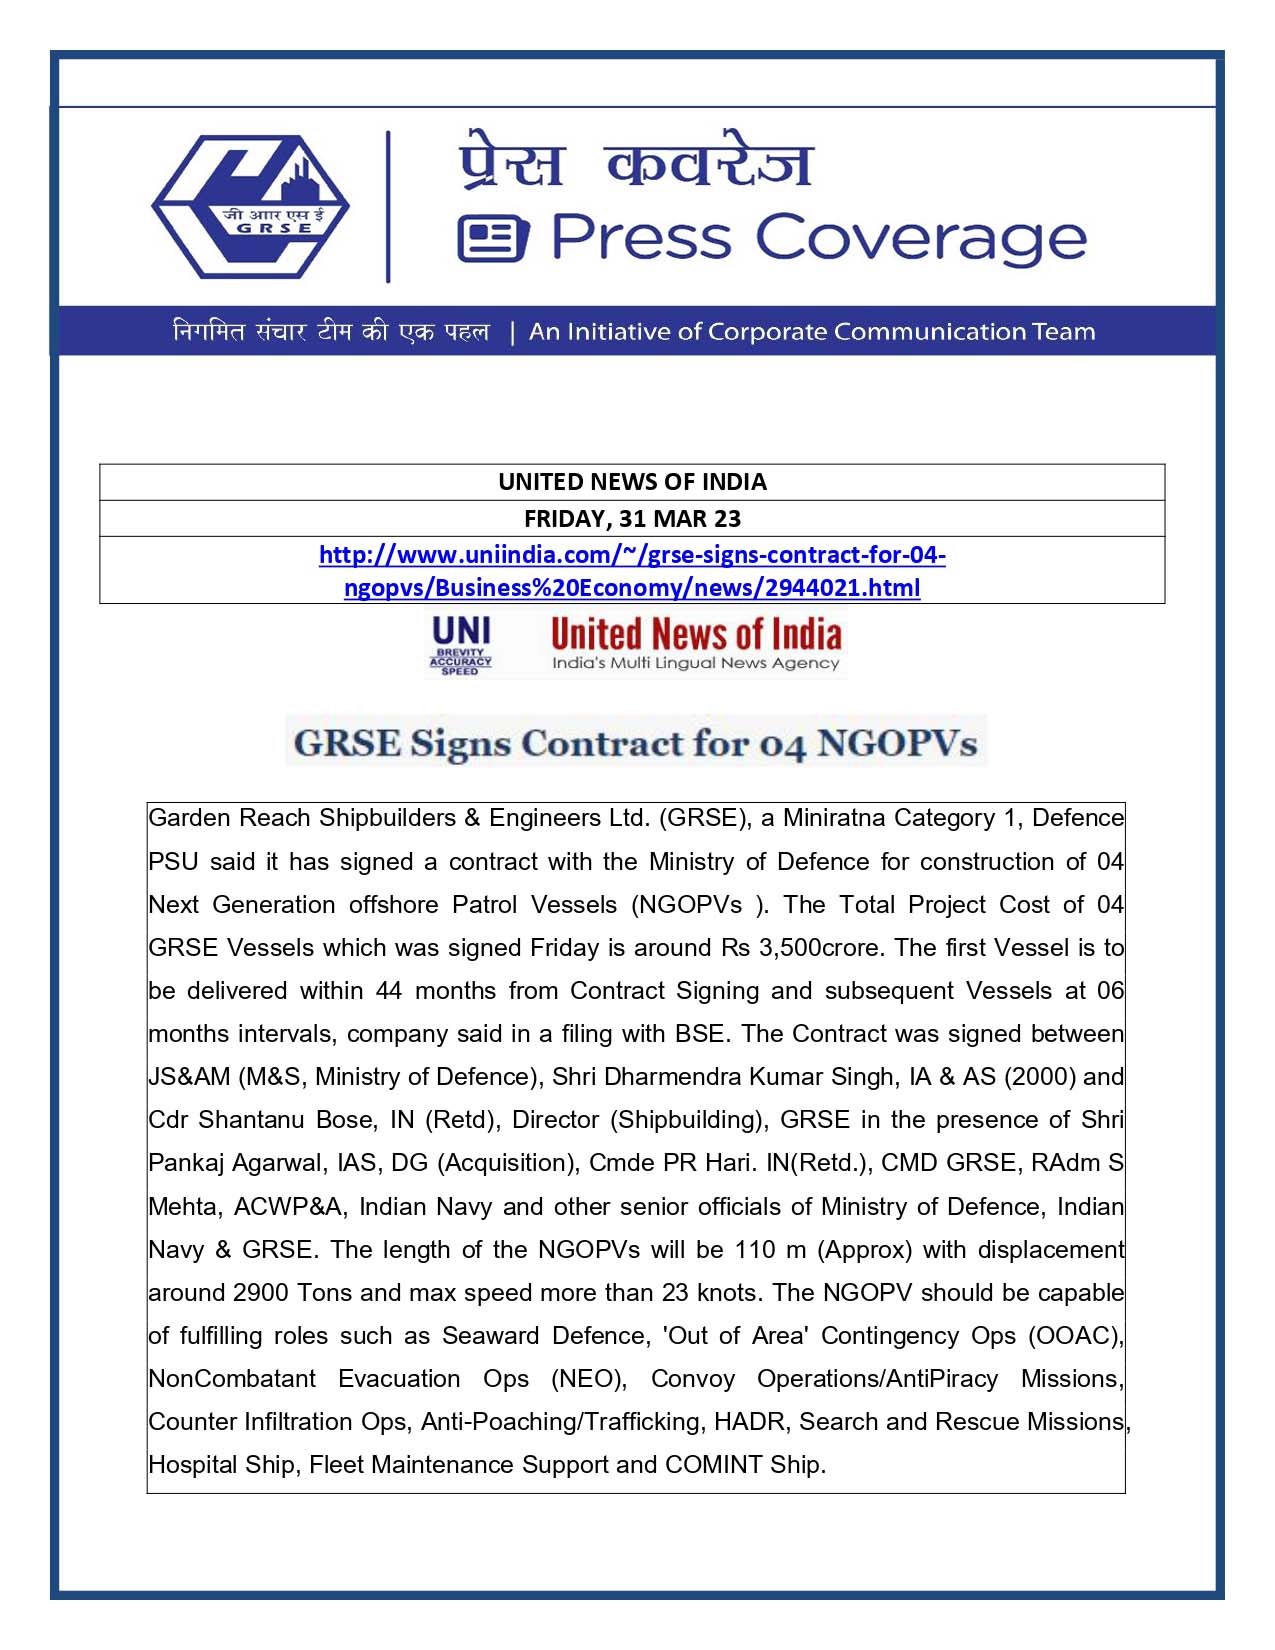 United News of India 31 Mar 23